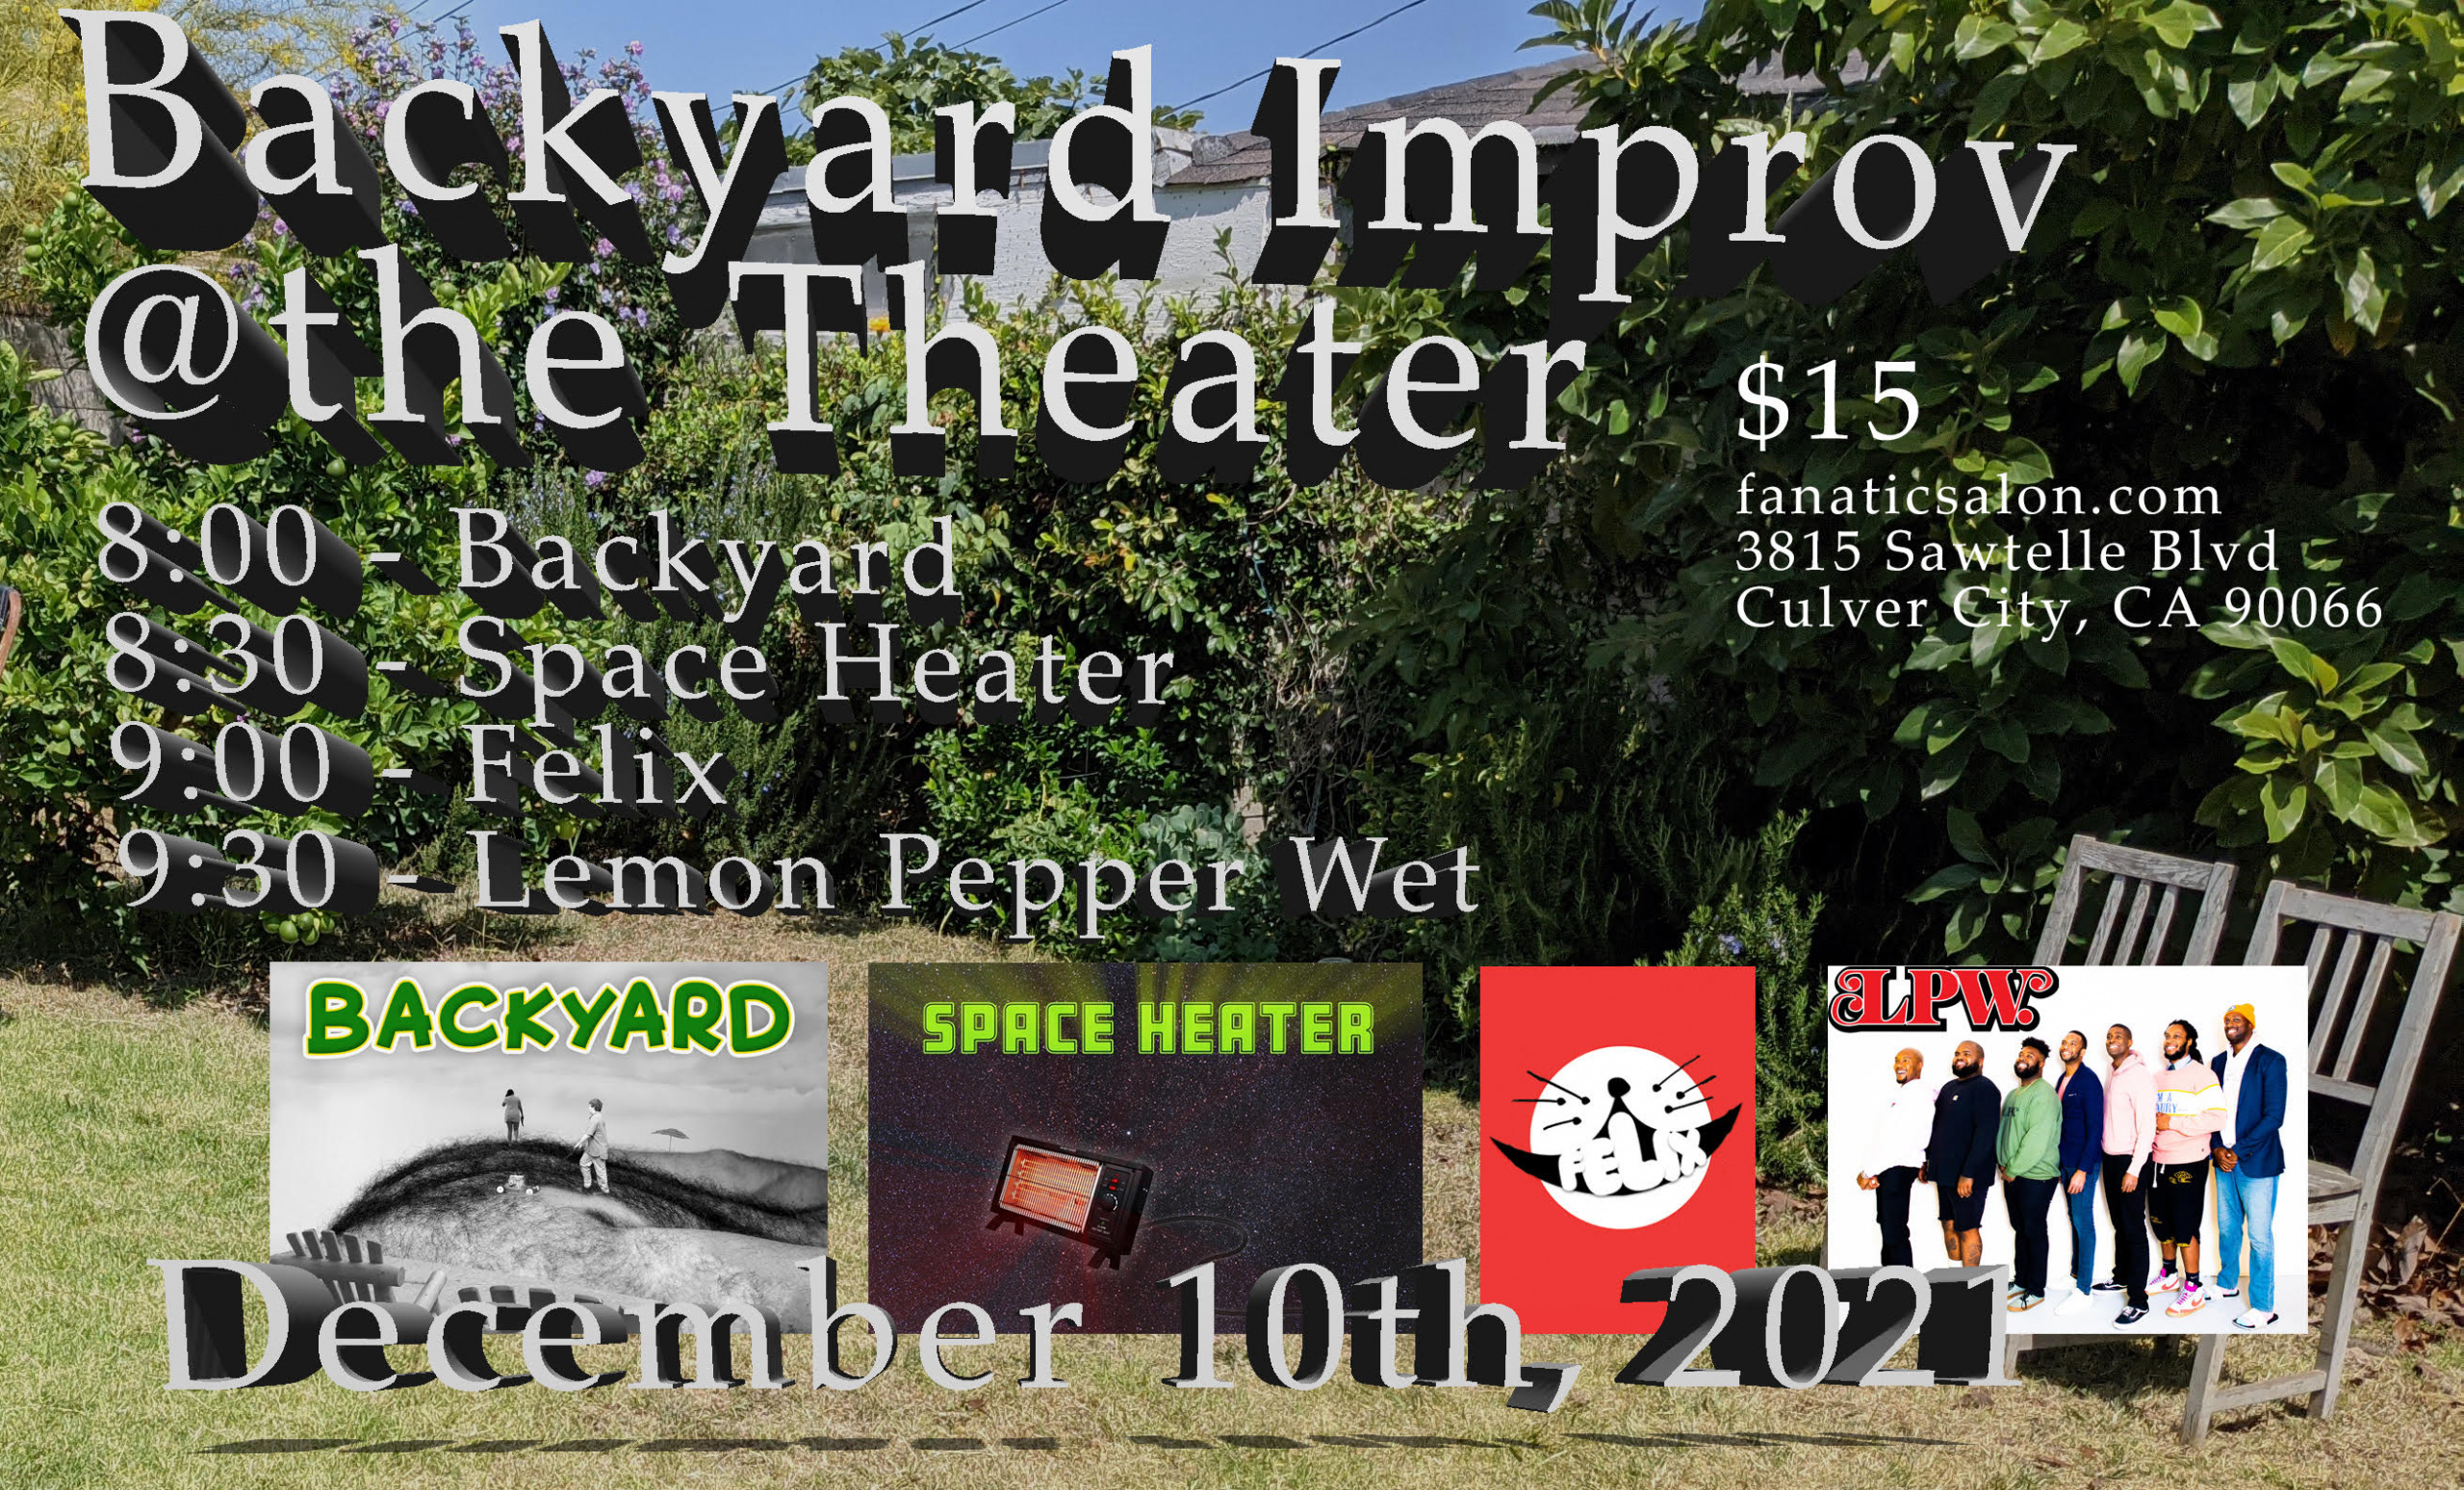 Backyard Improv @ the Theater